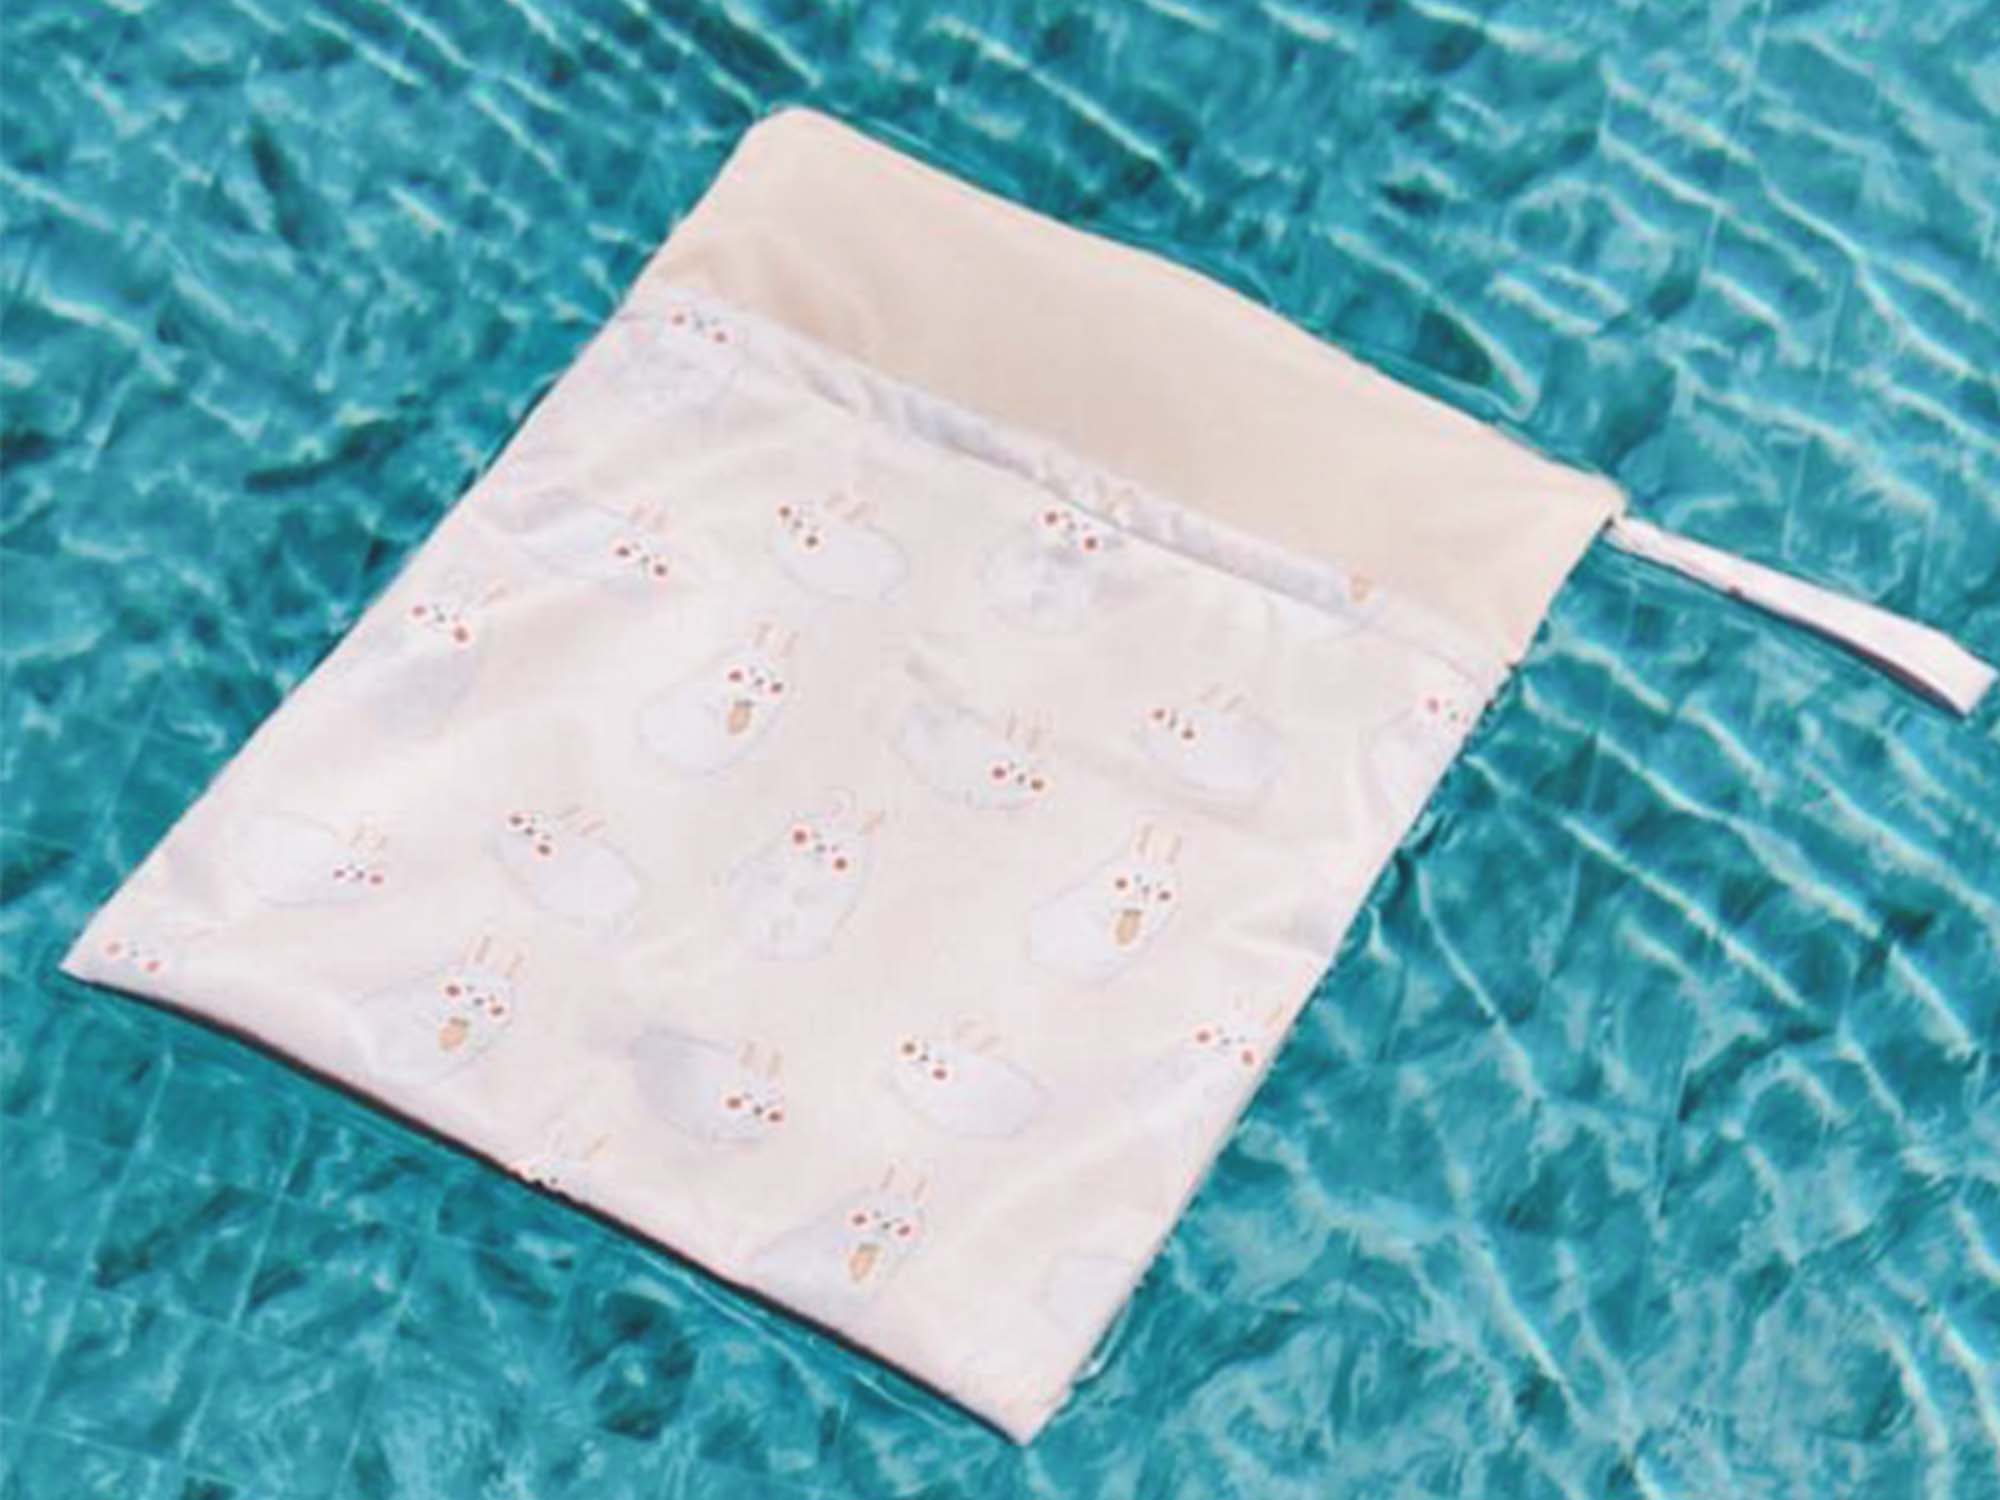 Cho Waterproof Diaper Wet Bag: Momo Bunny Peach (40 x 30cm)